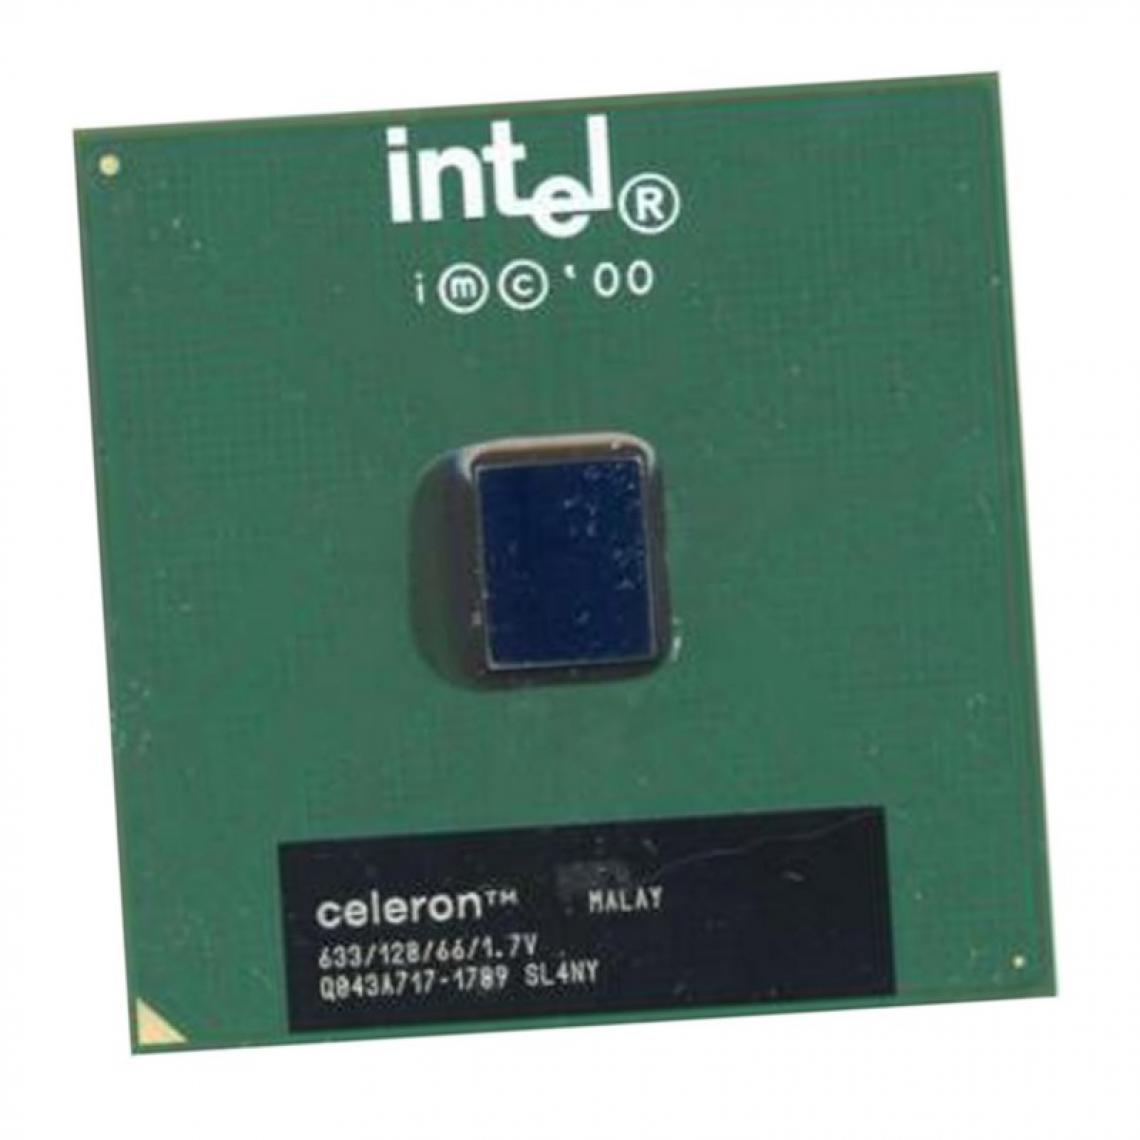 Intel - Processeur CPU Intel Celeron 633Mhz SL4NY Socket 370 FC-PGA Coppermine-128Ko - Processeur INTEL